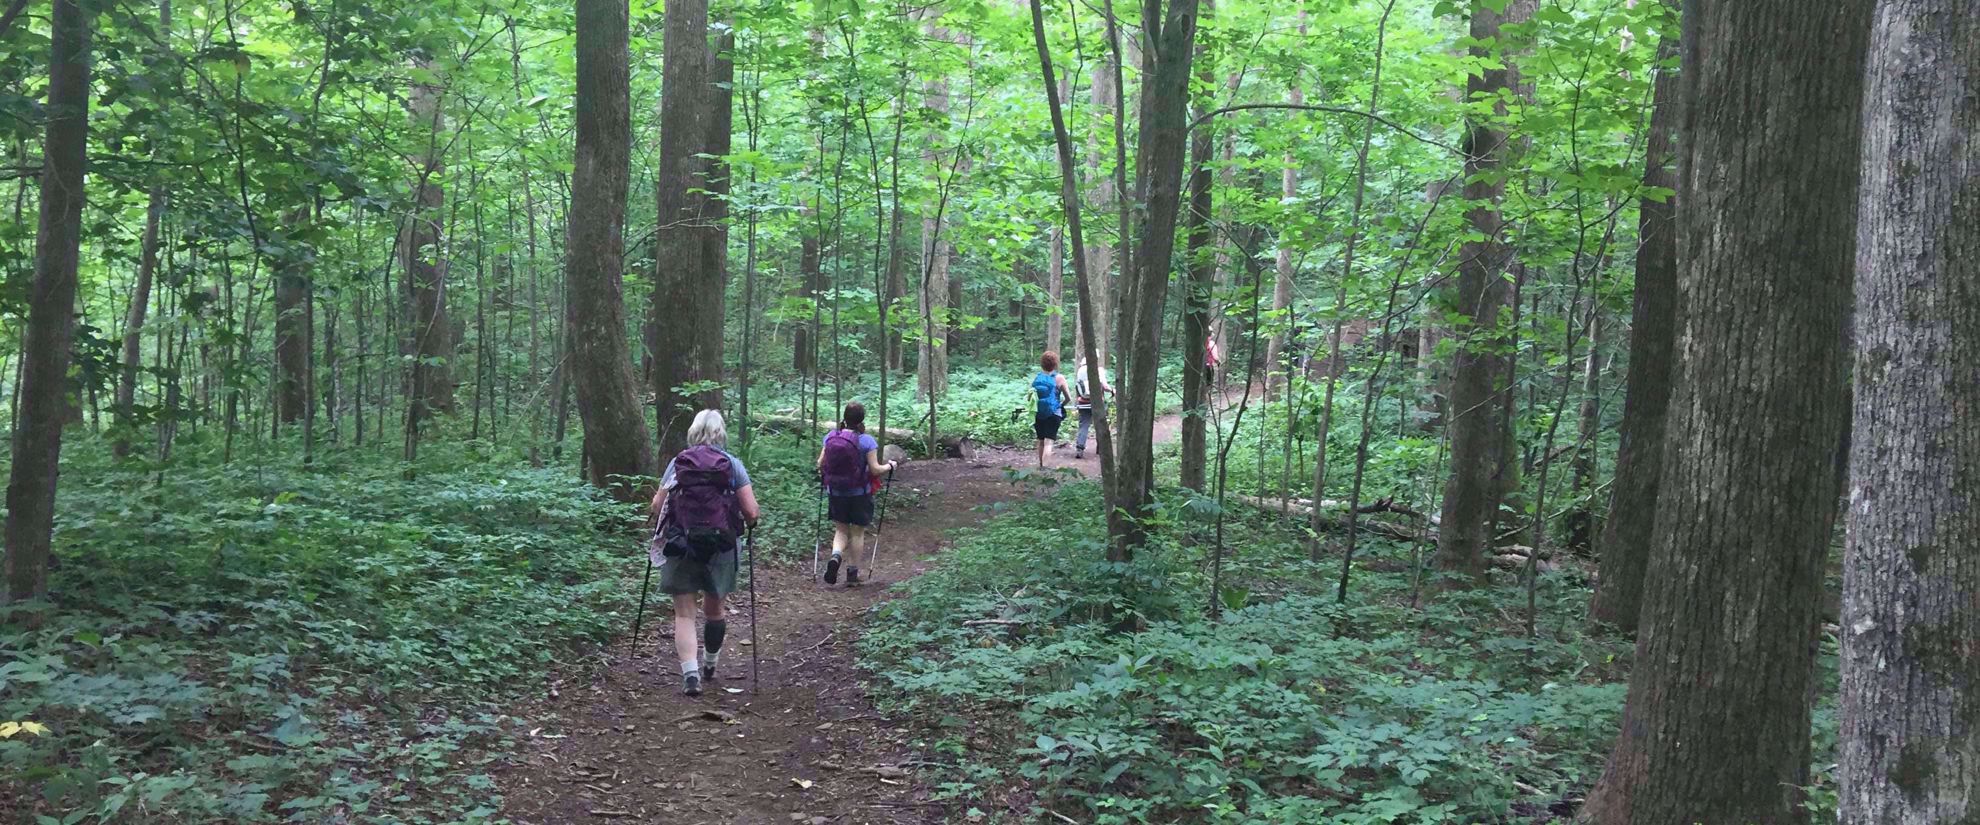 women hiking through lush green forest on appalachian trail